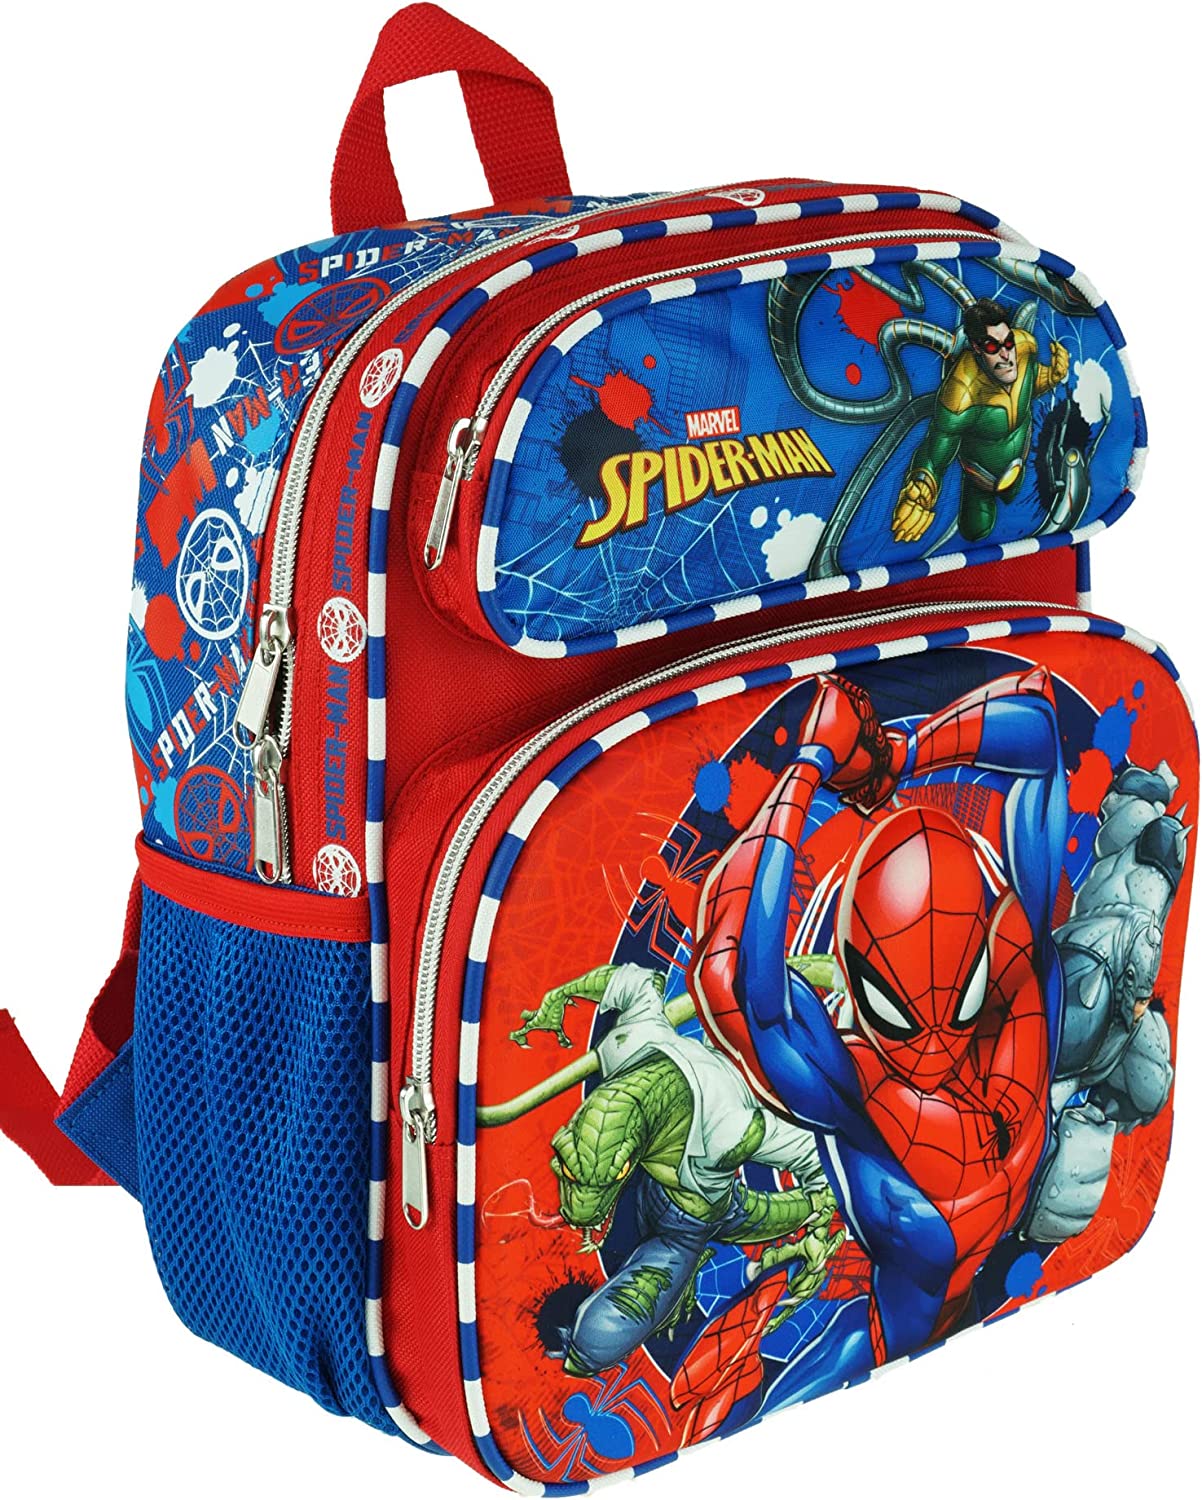 Spiderman 12 Inch Backpack 3D EVA Molded